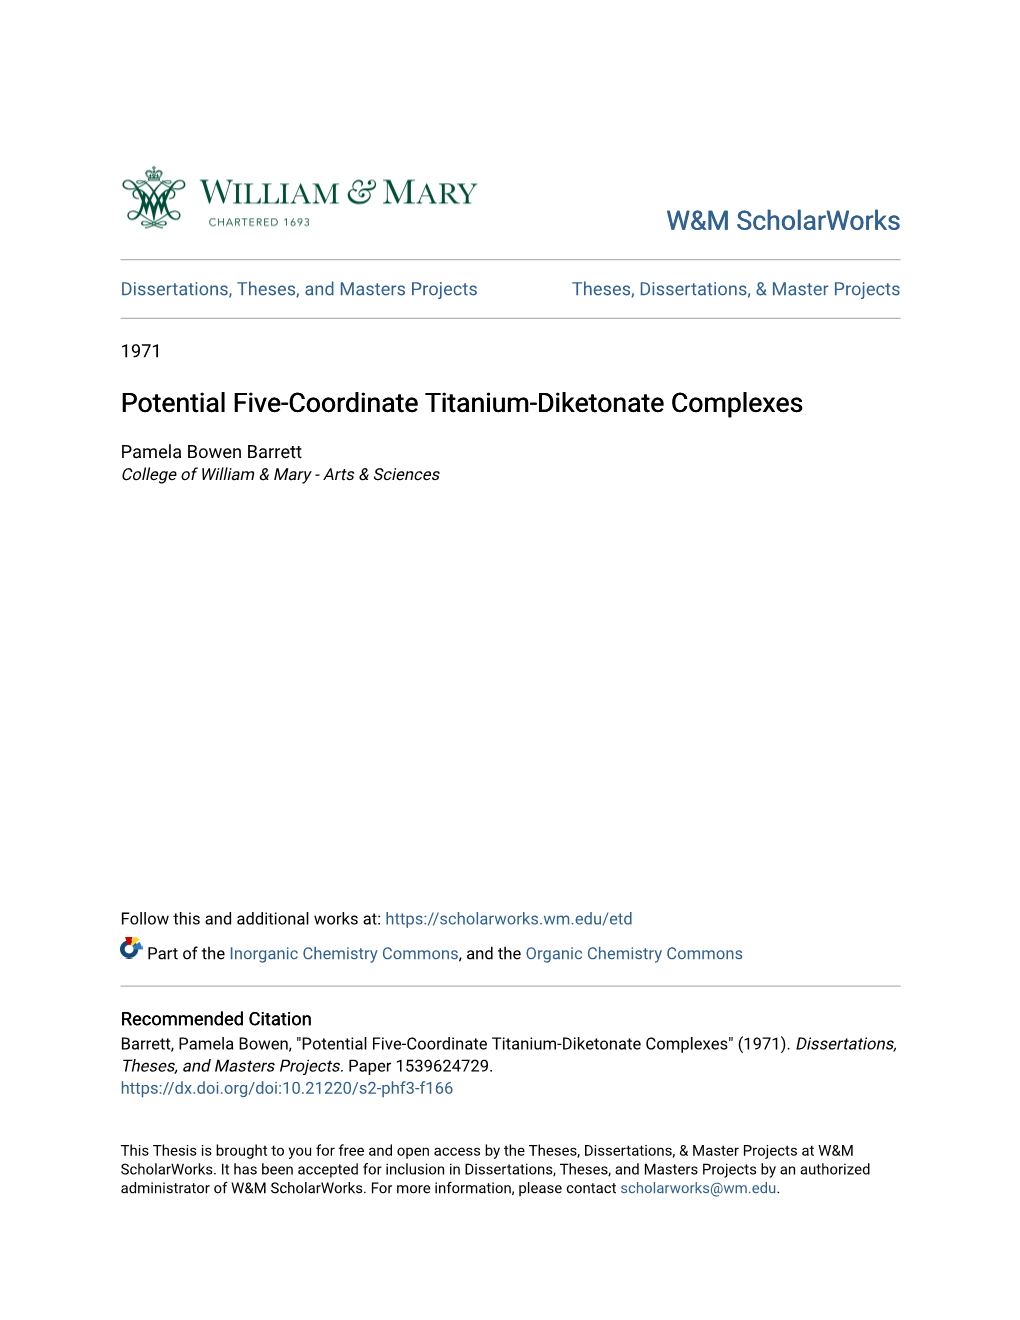 Potential Five-Coordinate Titanium-Diketonate Complexes